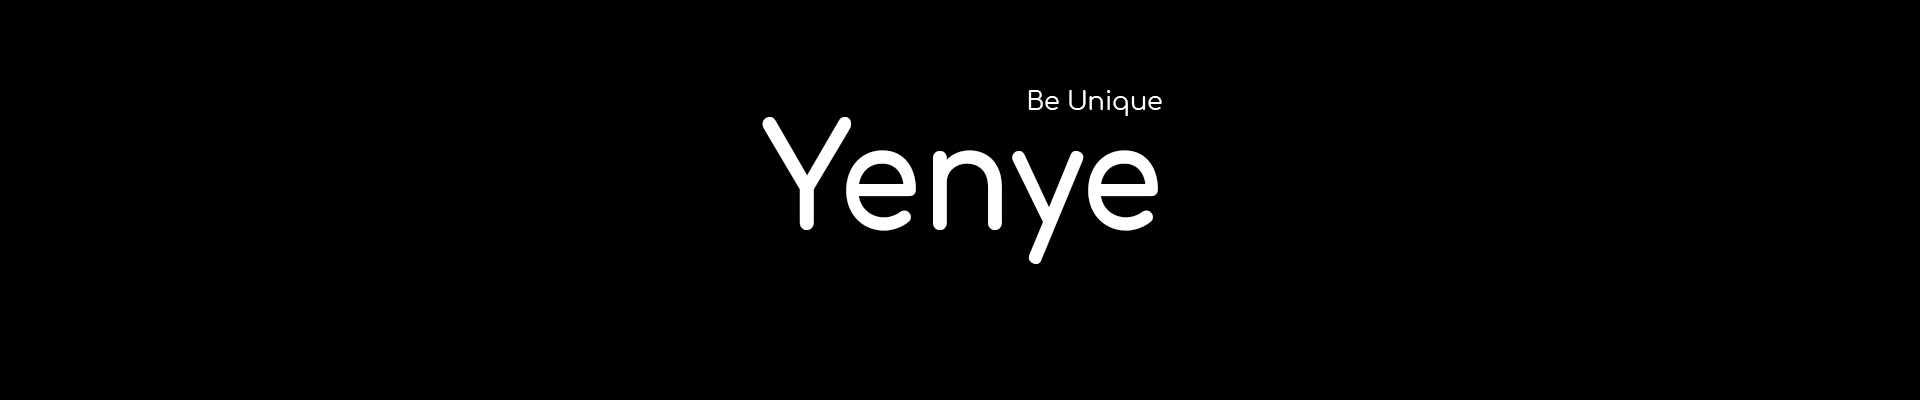 YENYE Banner